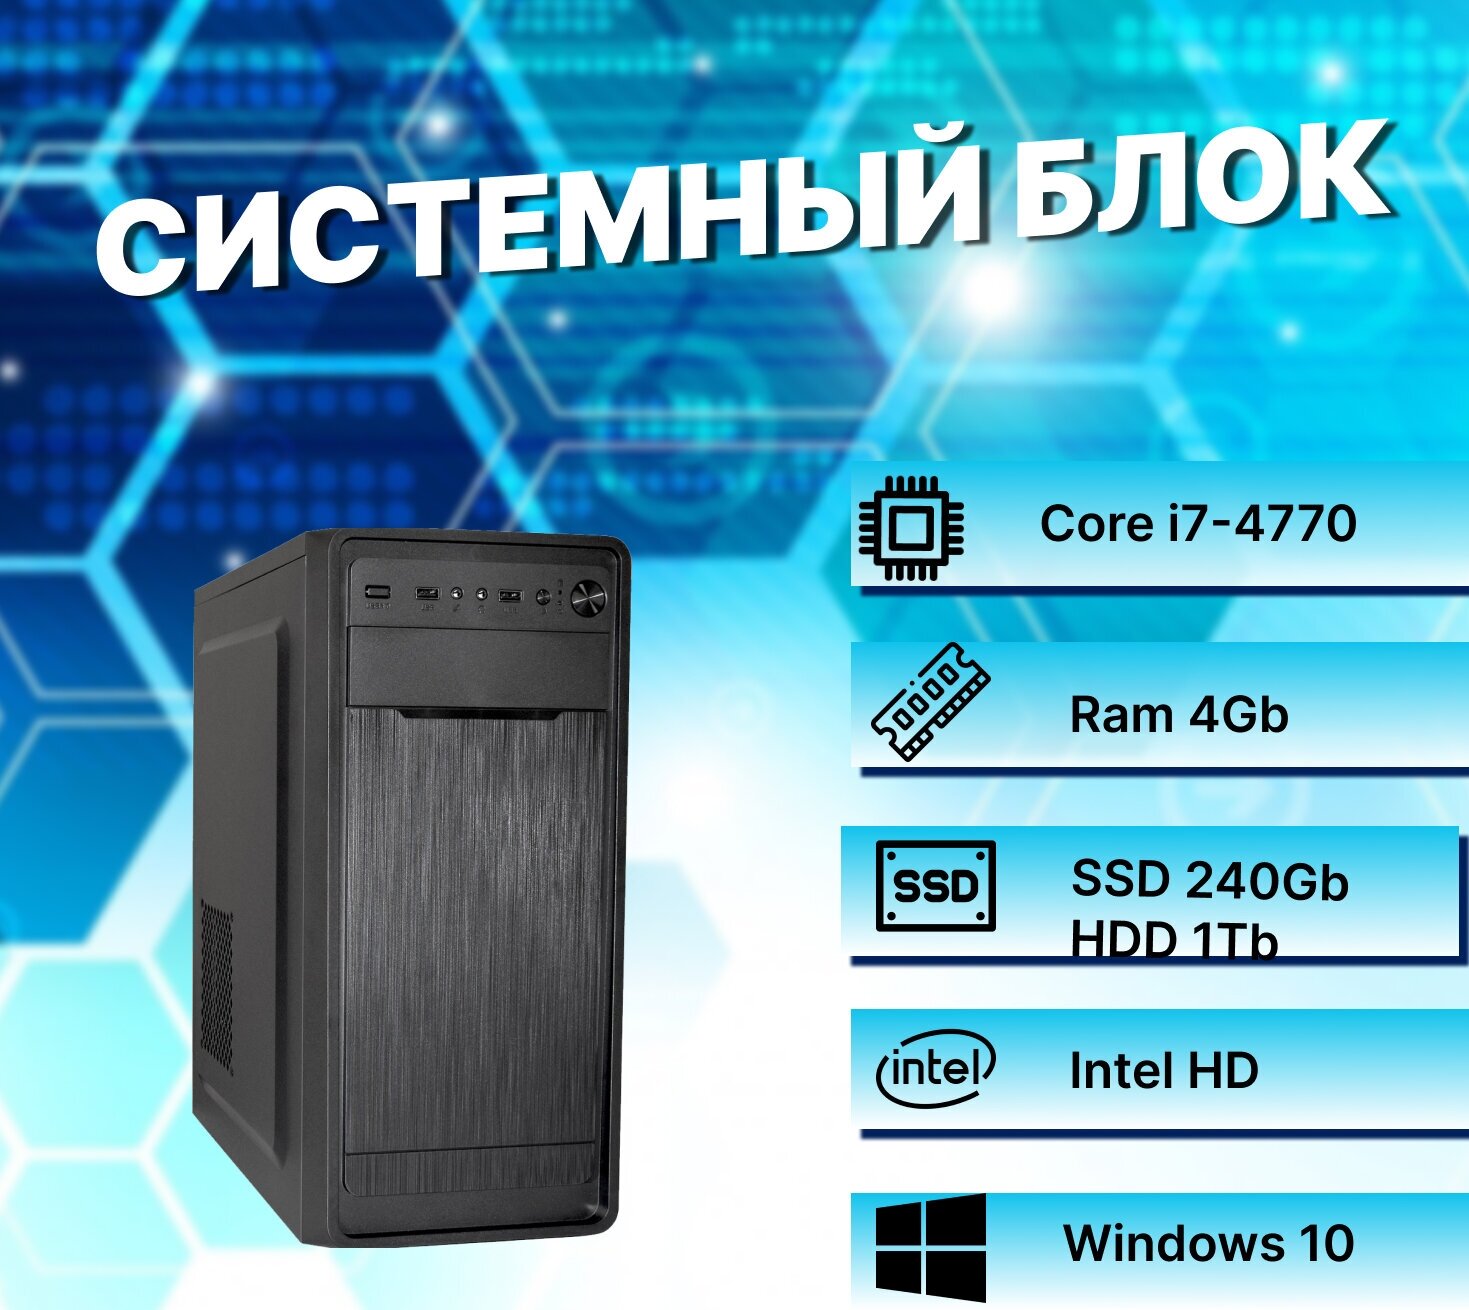 Системный блок Intel Core i7-4770 (3.4ГГц)/ RAM 4Gb/ SSD 240Gb/ HDD 1Tb/ Intel HD/ Windows 10 Pro